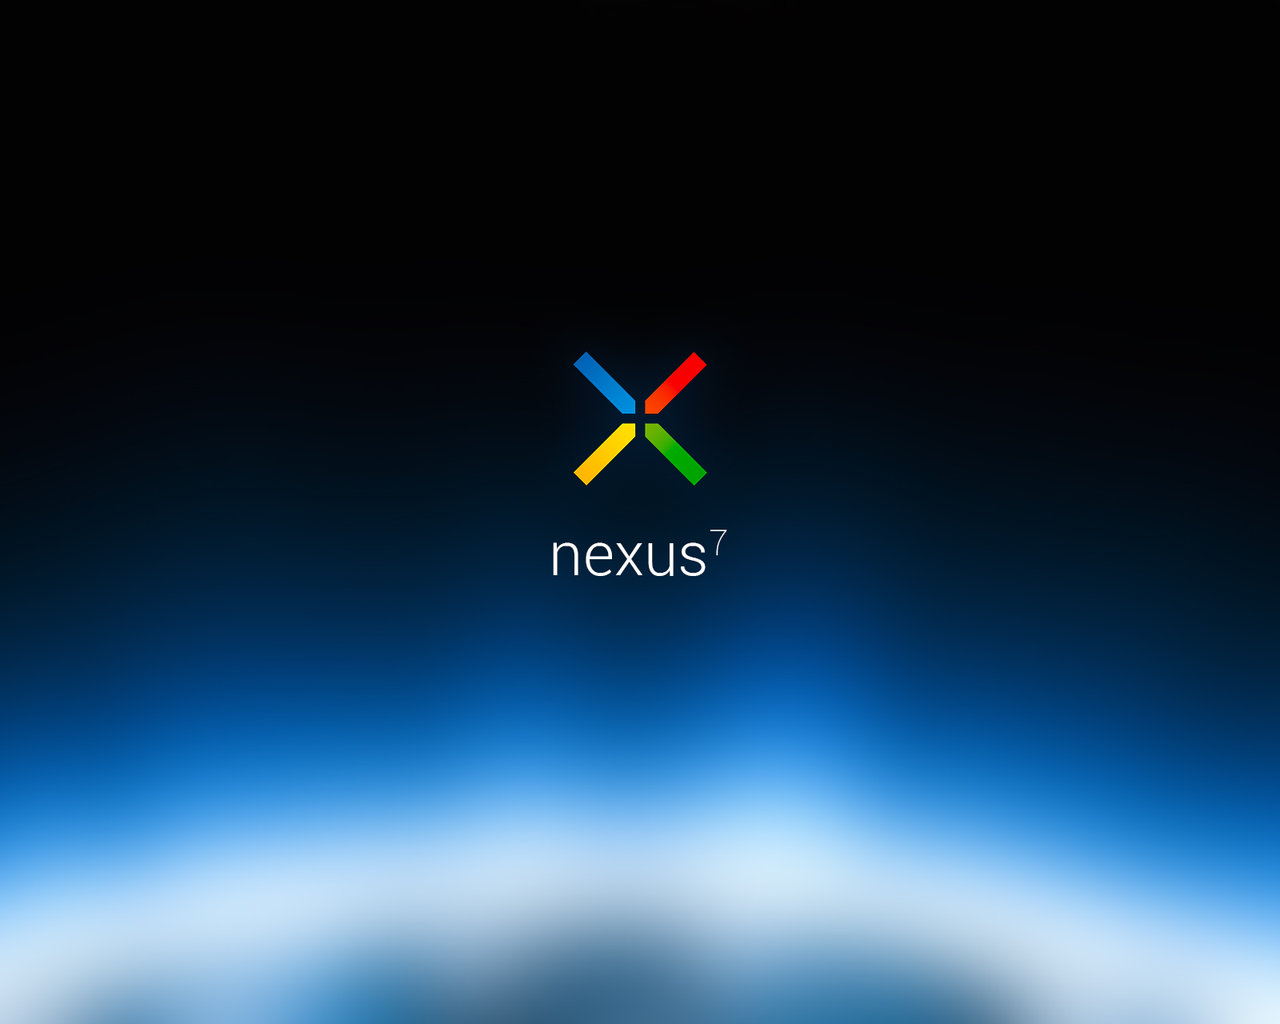 Nexus Wallpaper On